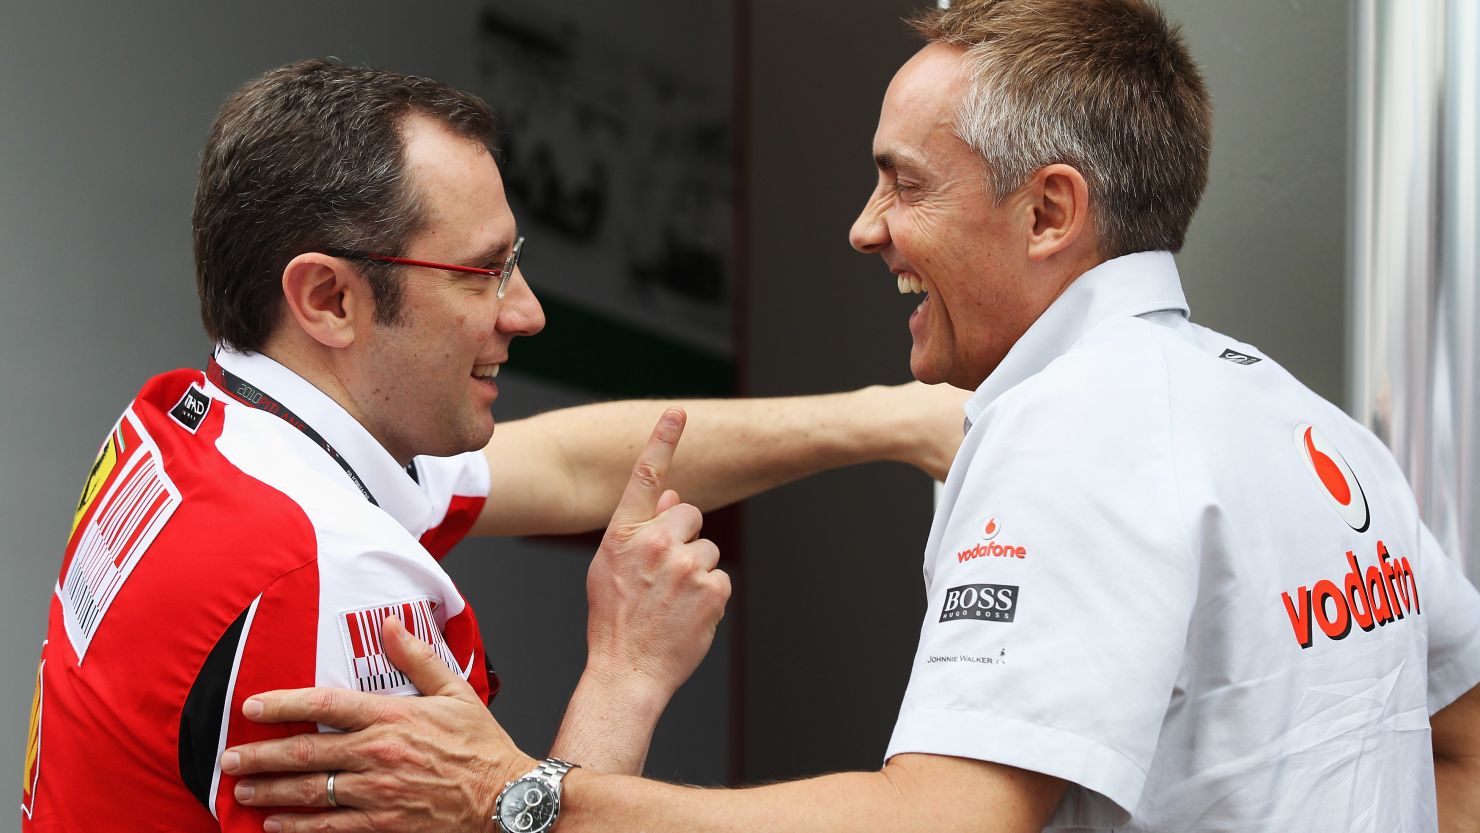 Ferrari team principal Stefano Domenicali, left, talks with McLaren counterpart Martin Whitmarsh in March 2010.